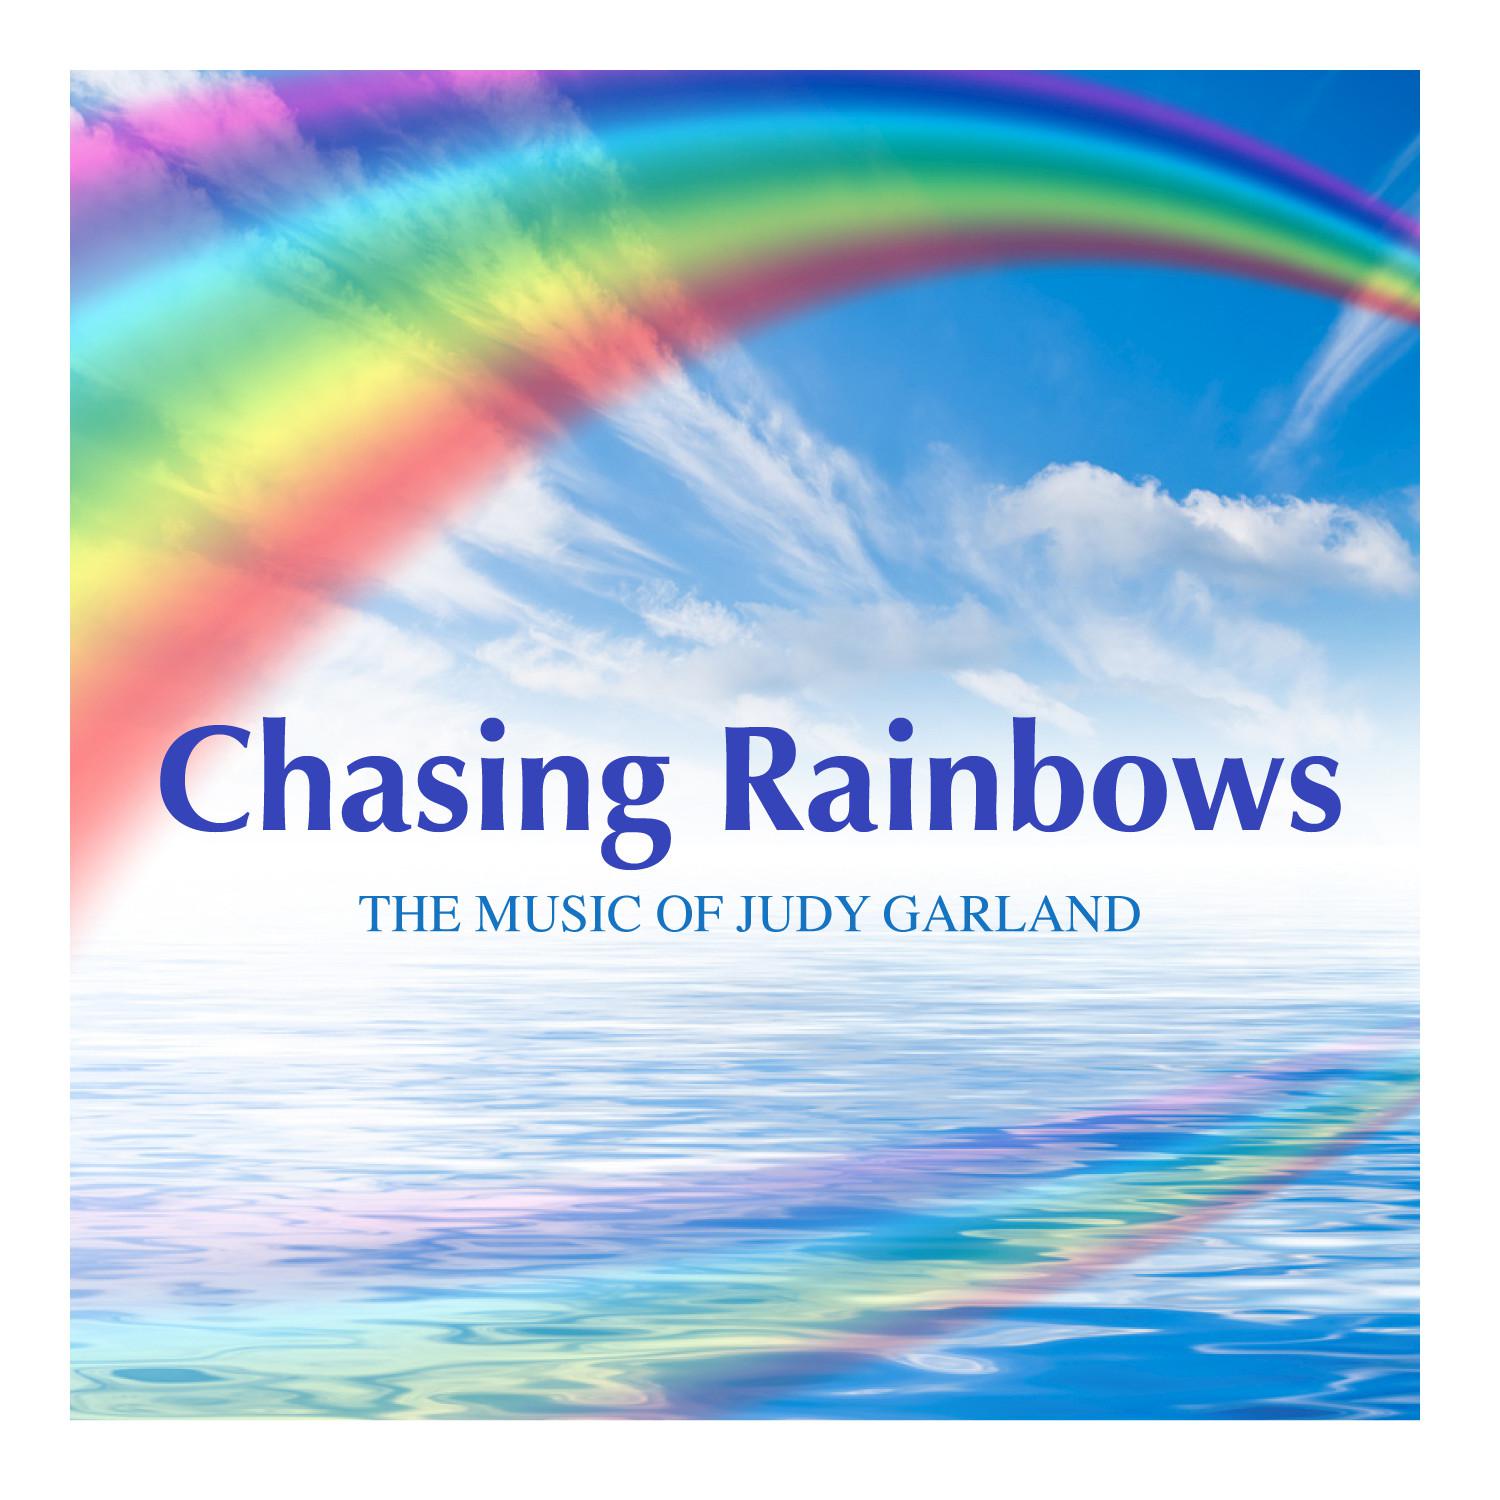 Chasing Rainbows - The Music of Judy Garland